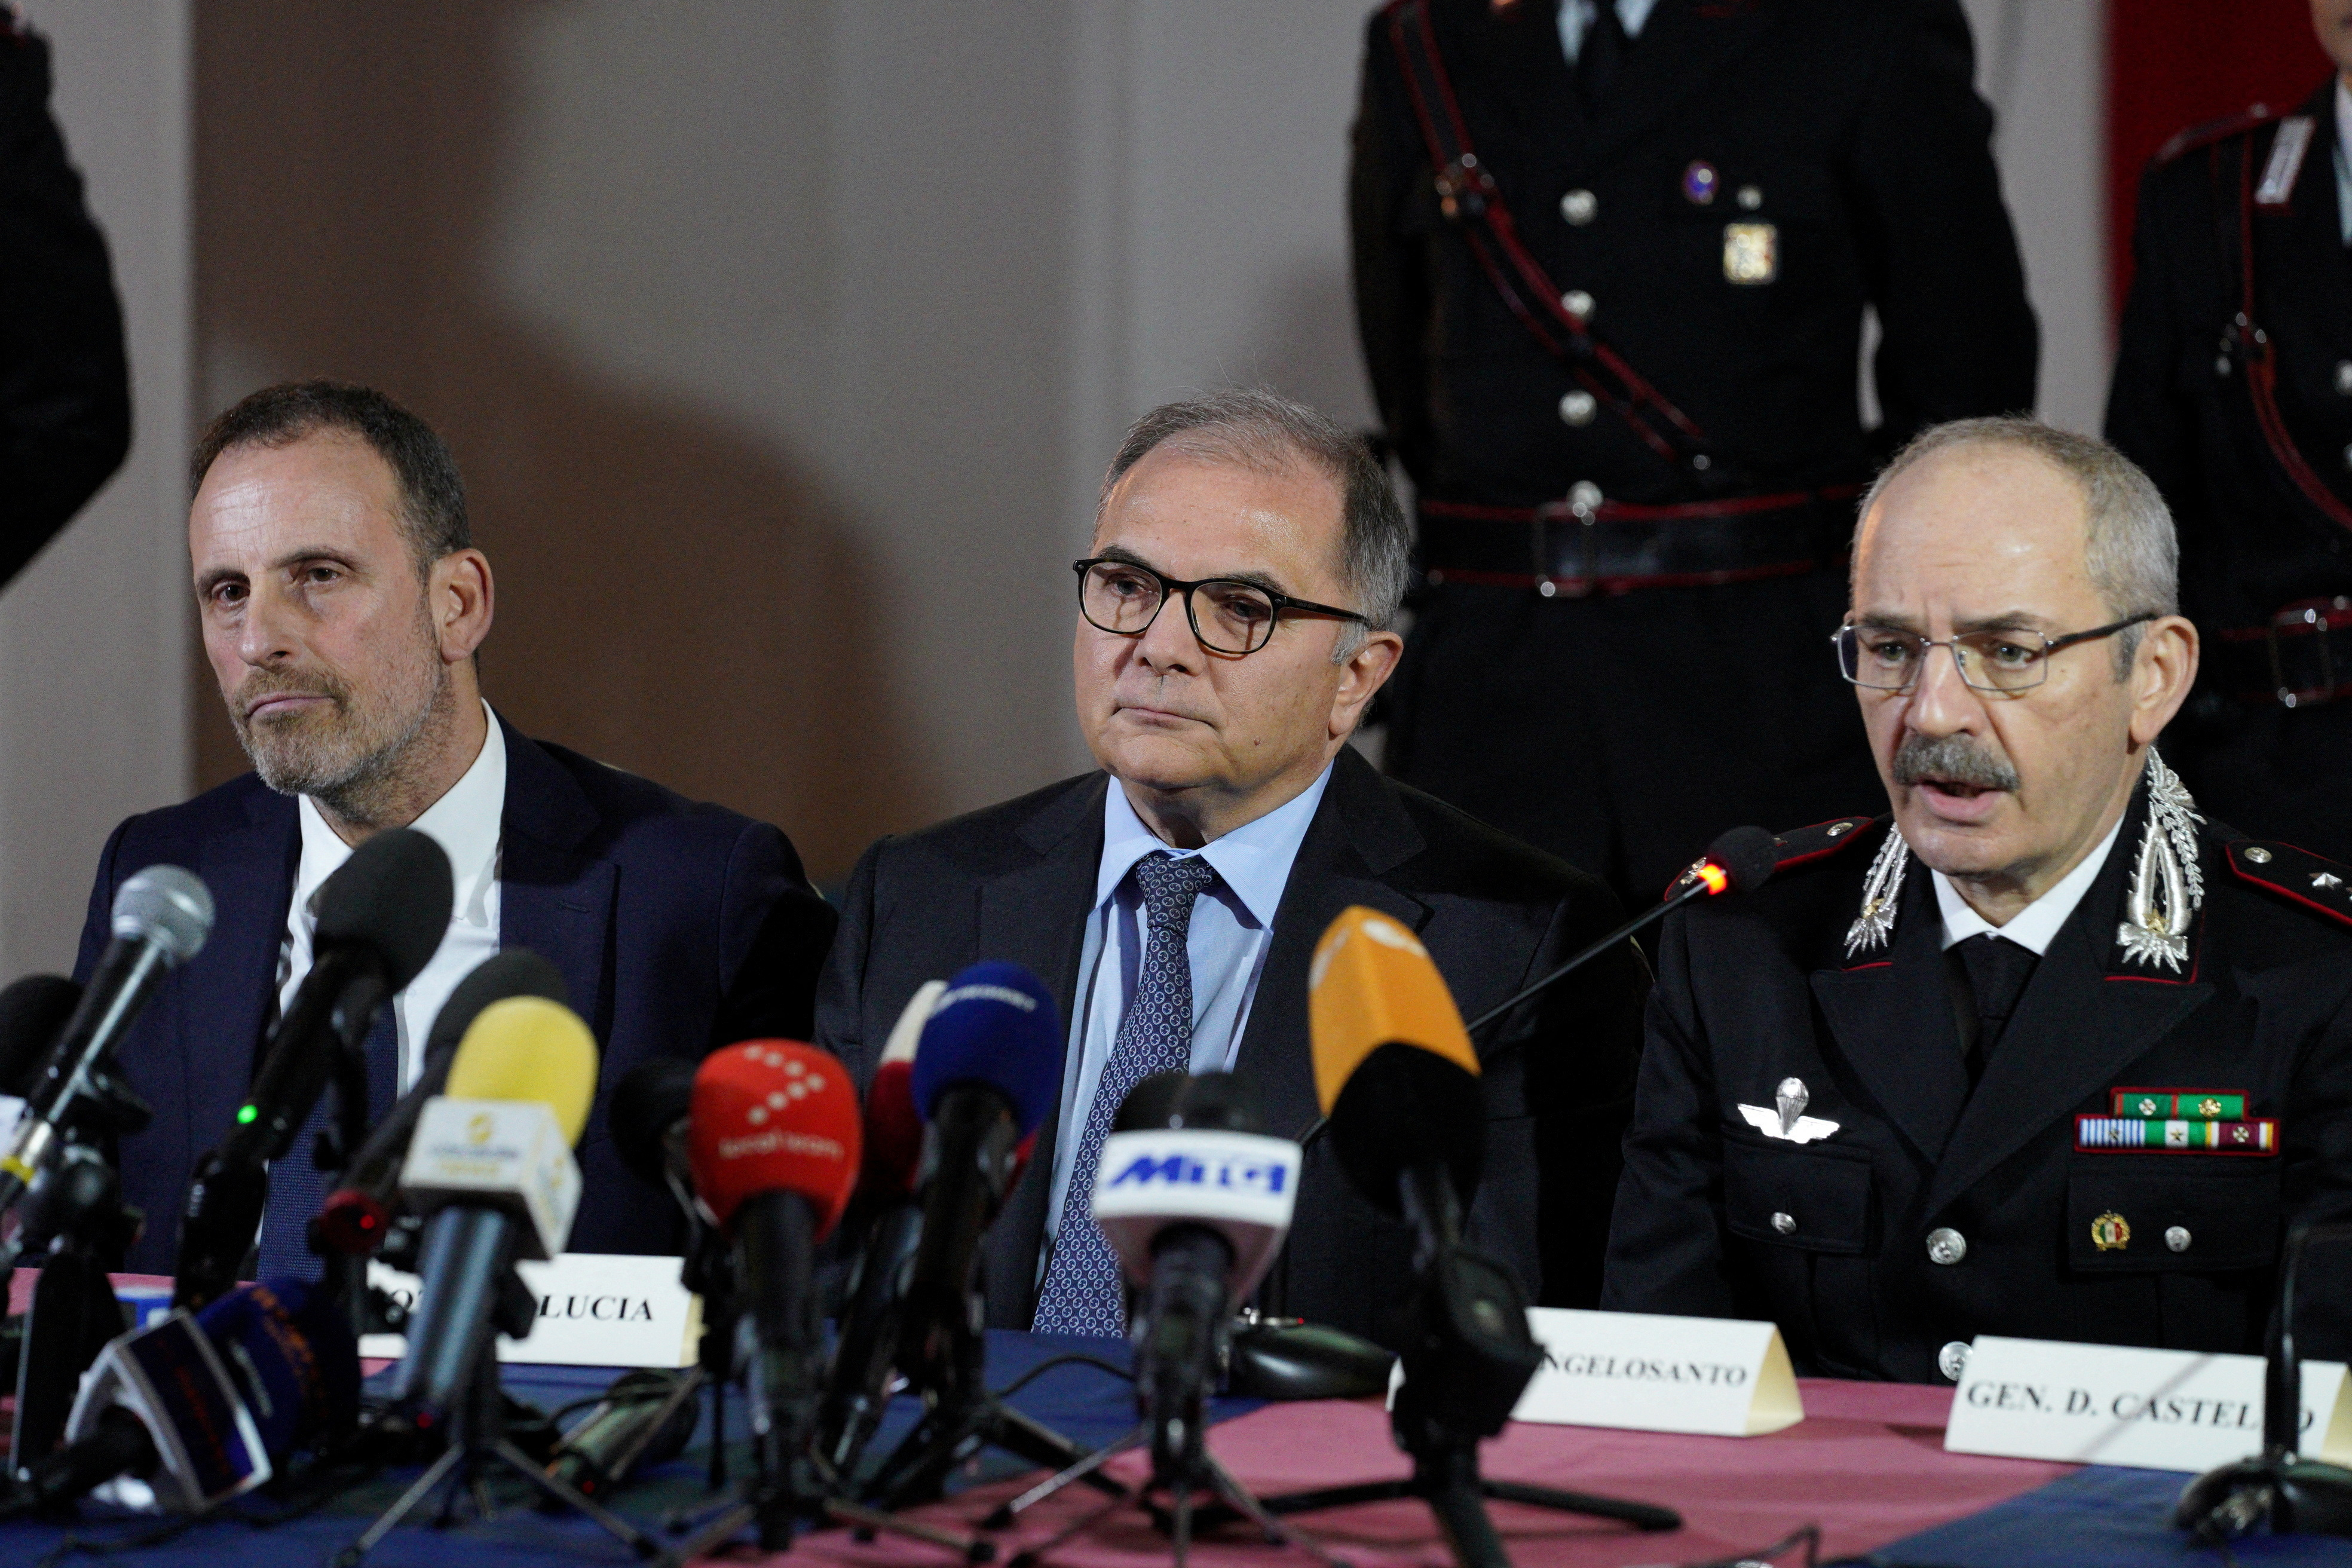 News conference following the arrest of mafia boss Matteo Messina Denaro, in Palermo